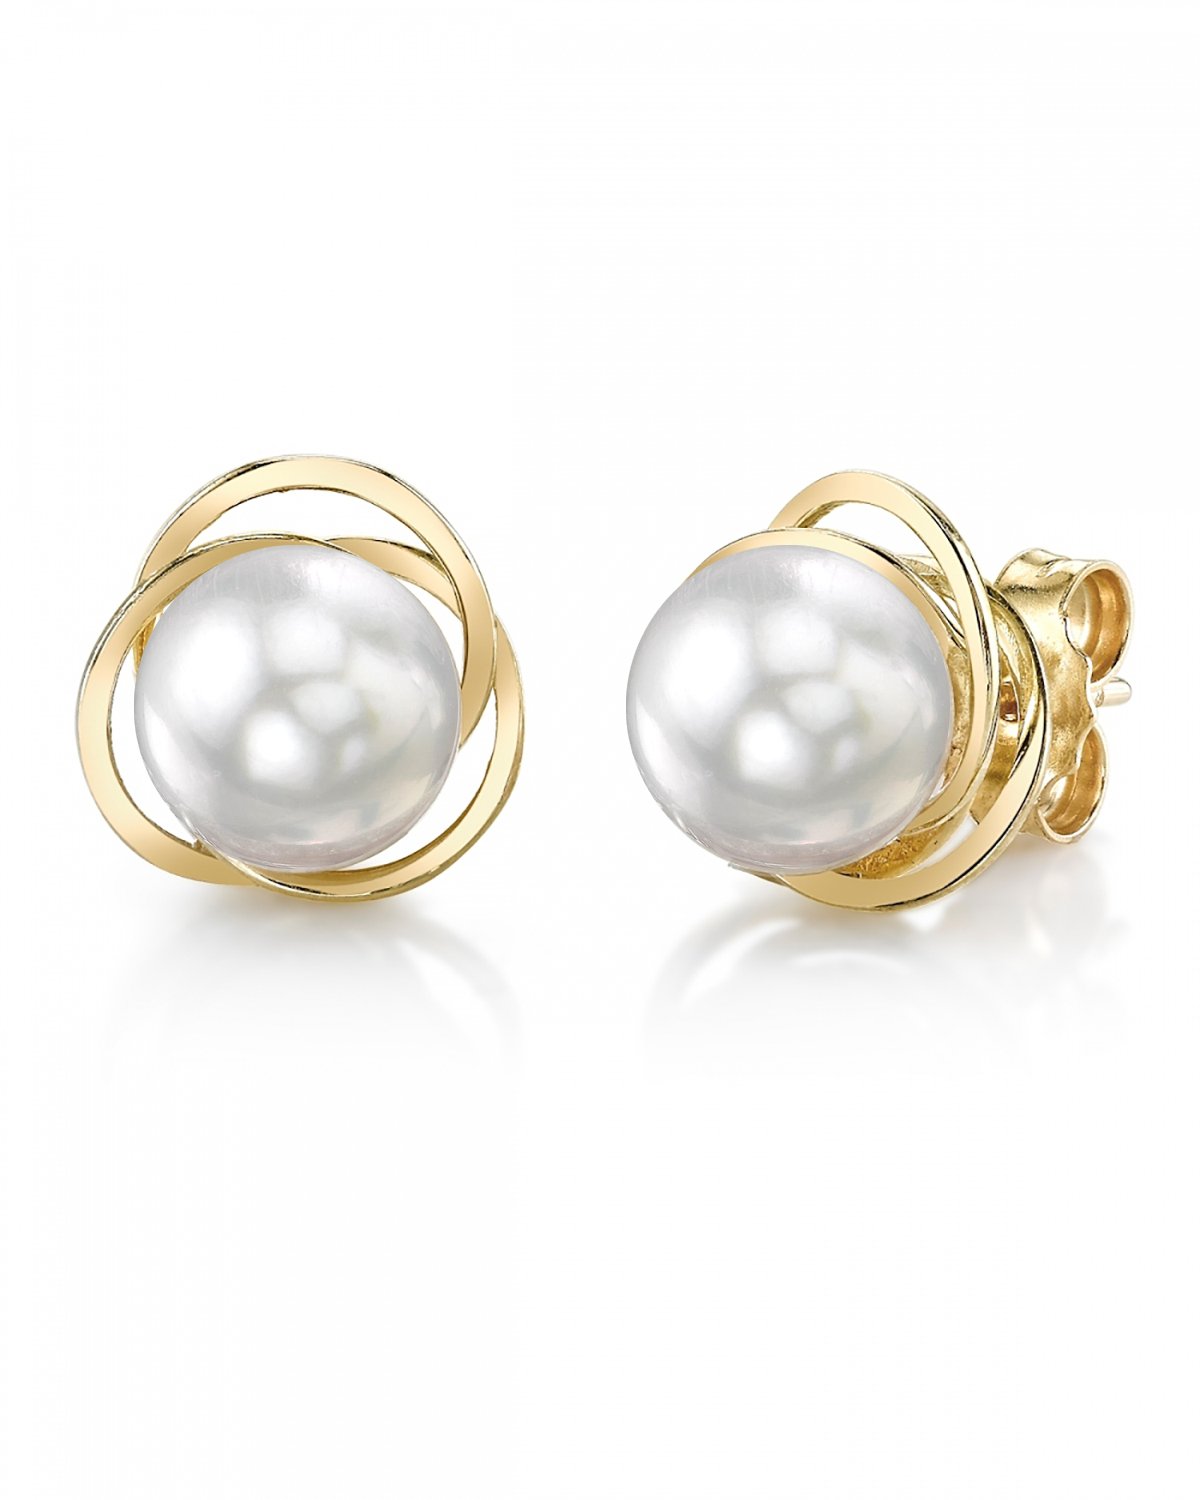 White South Sea Pearl Lexi Earrings - Model Image